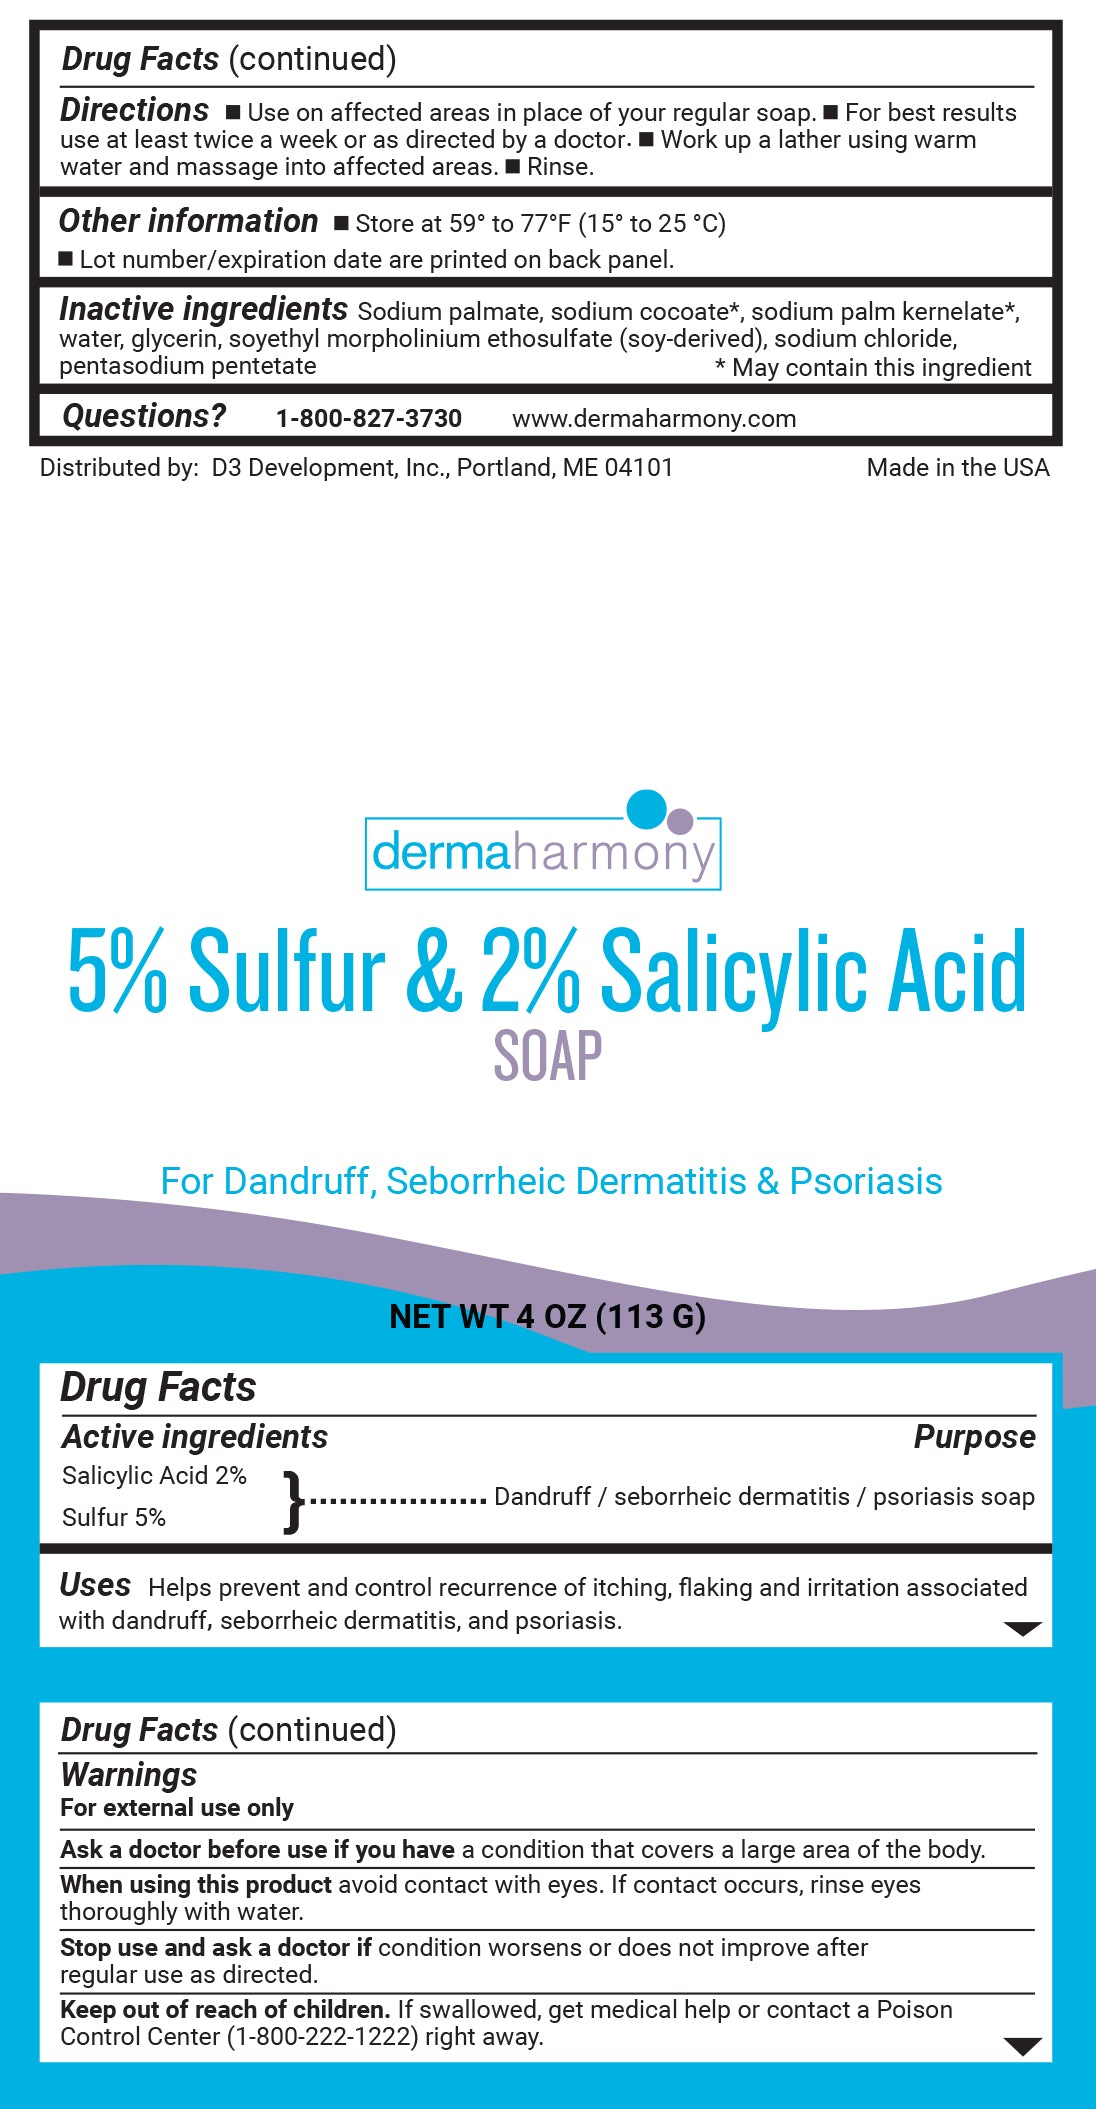 5% Sulfur & 2% Salicylic Acid Body and Facial Bar Soap